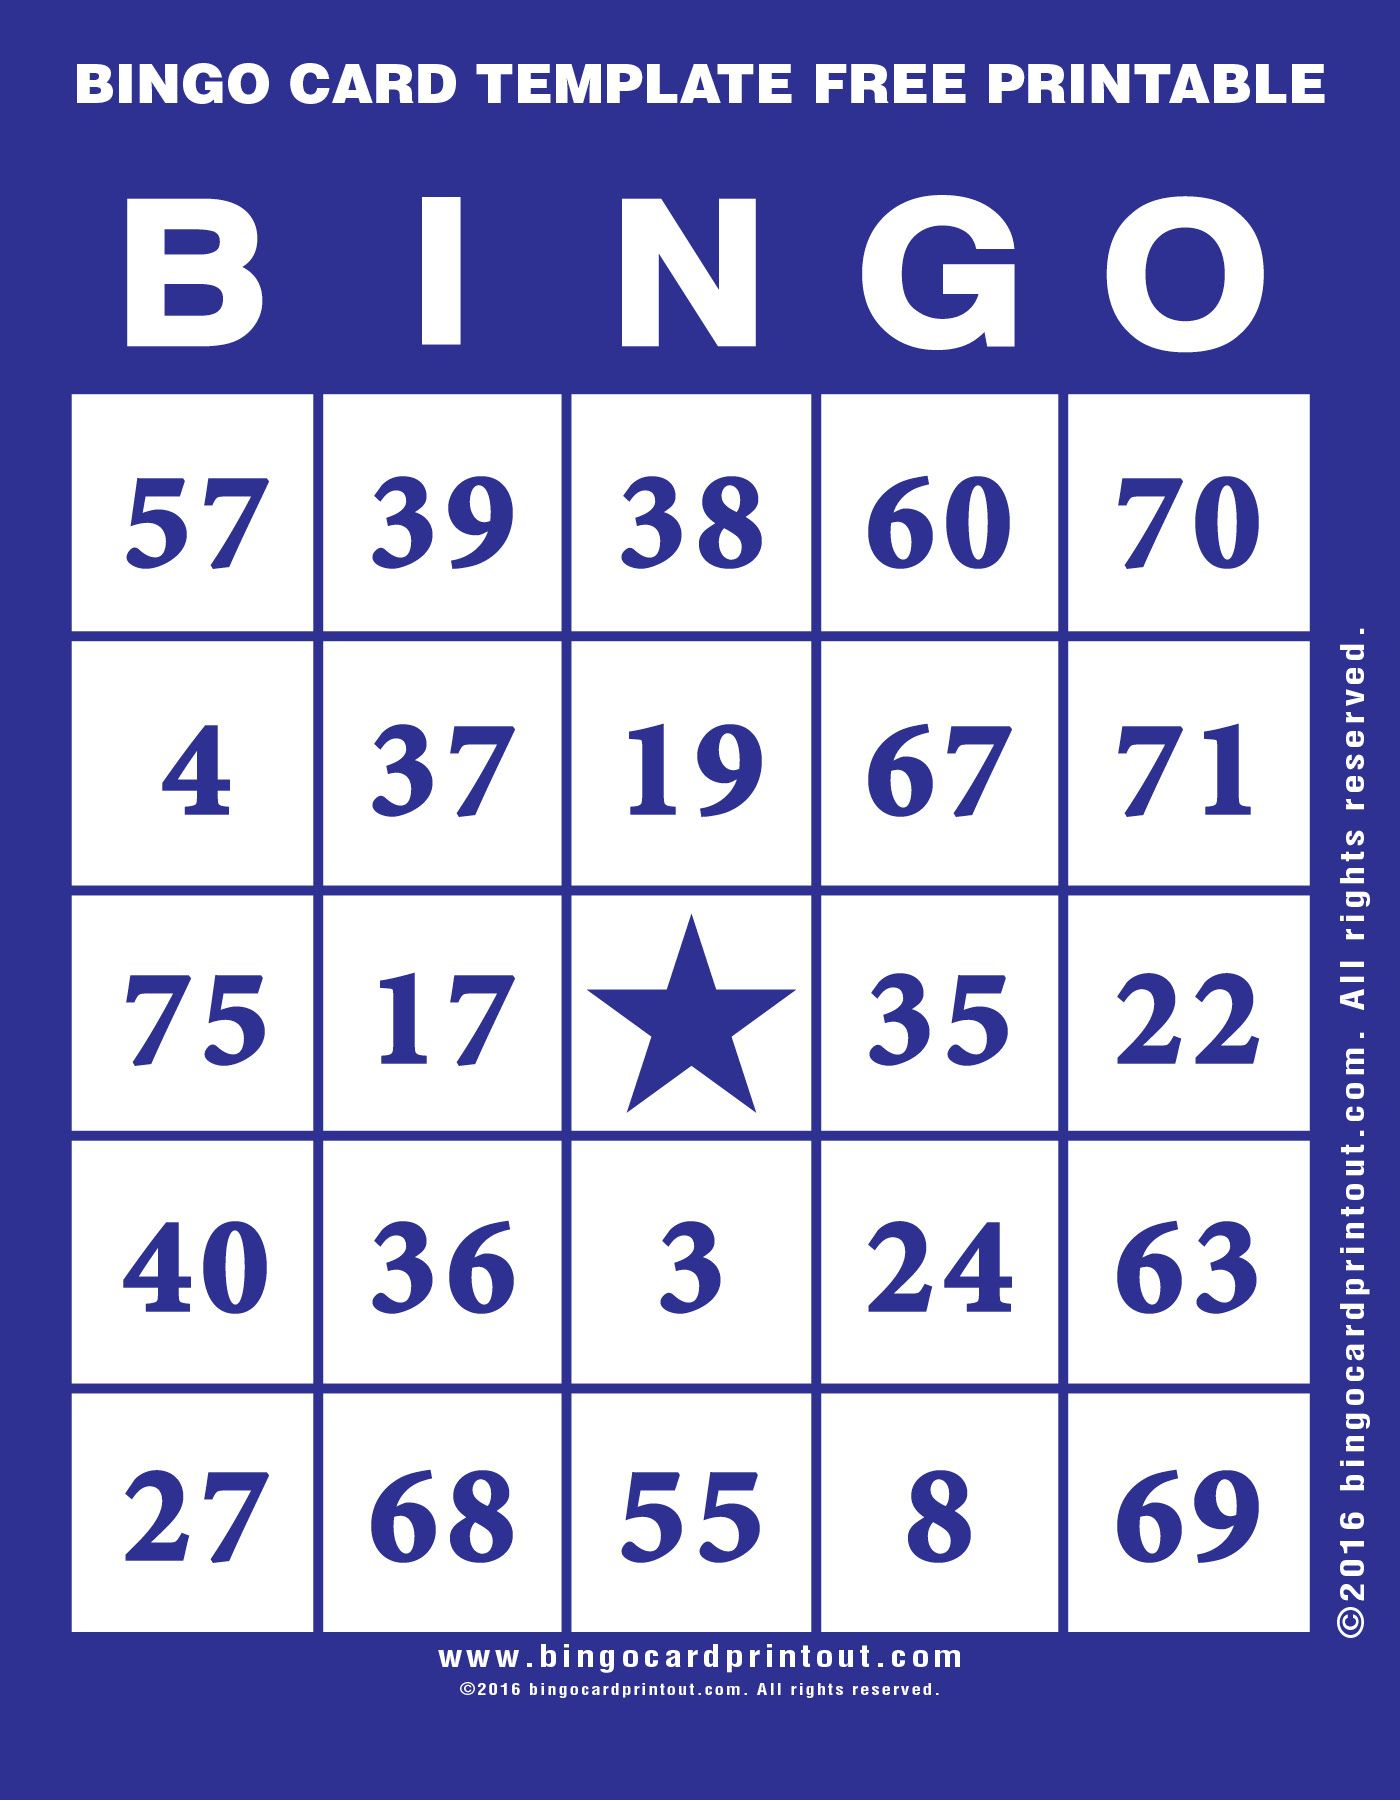 Bingo Card Template Free Printable 6 | Bingo Cards Printable